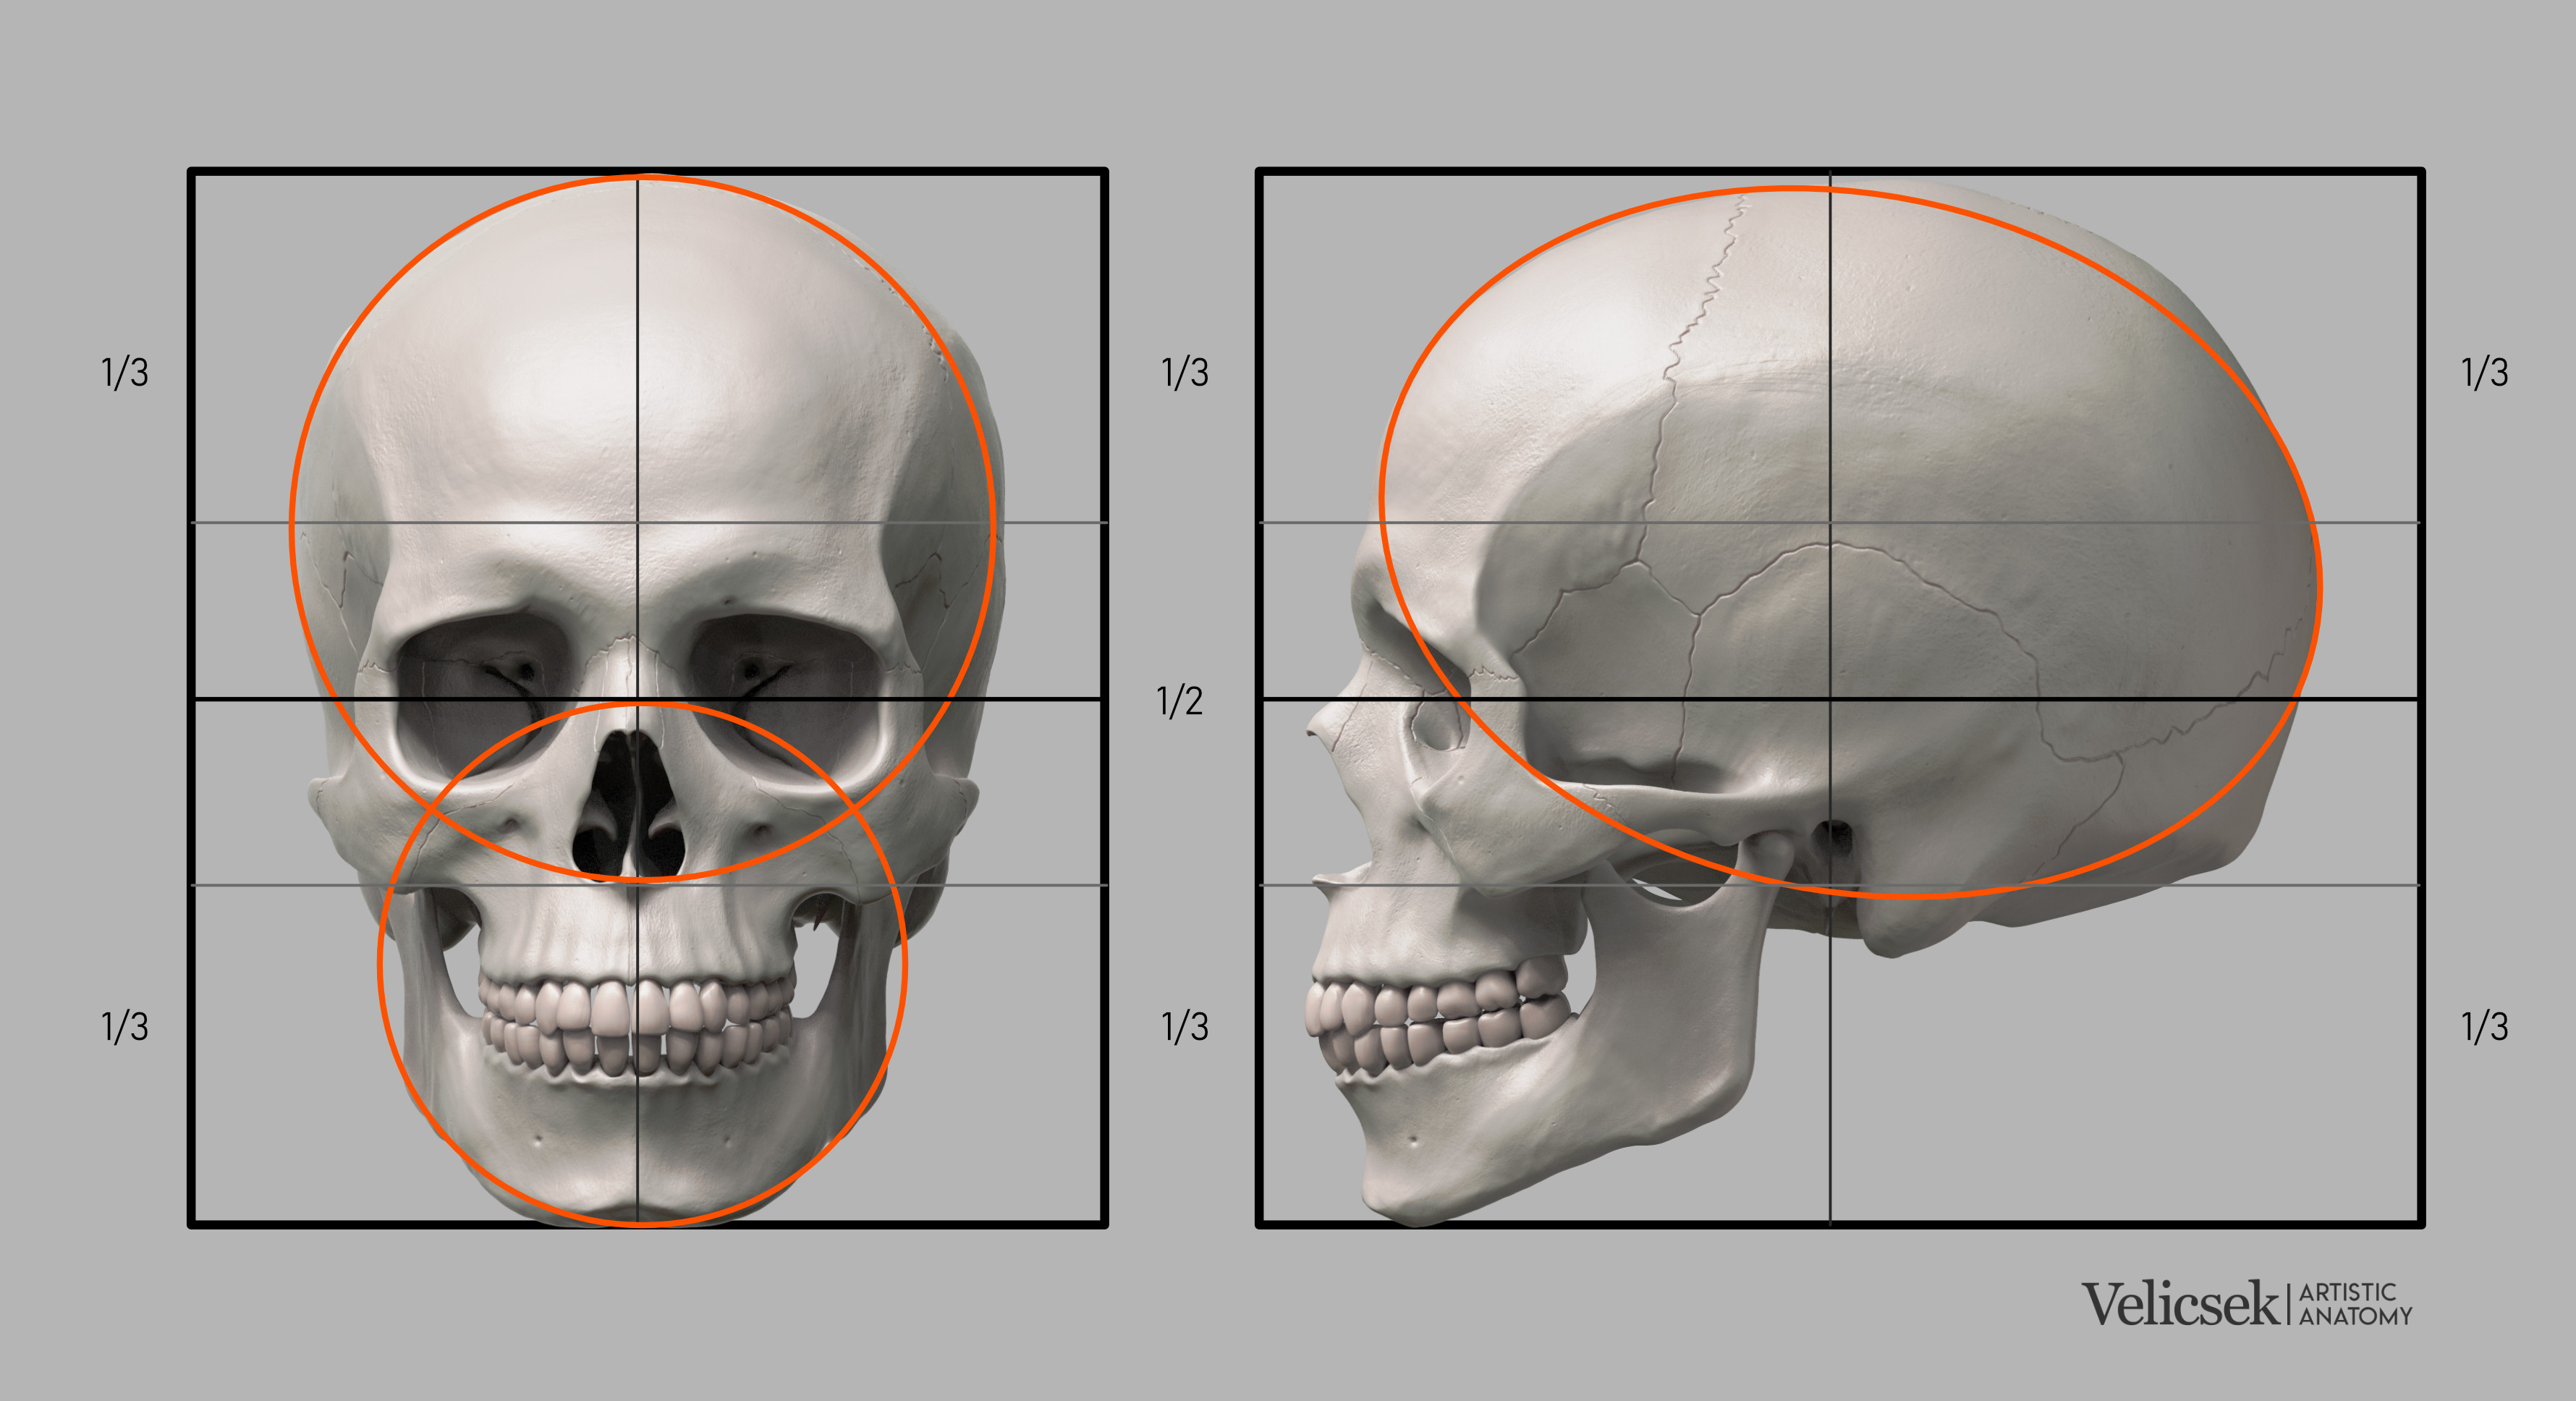 Gusztav Velicsek - Proportions Guide of the Human Skull